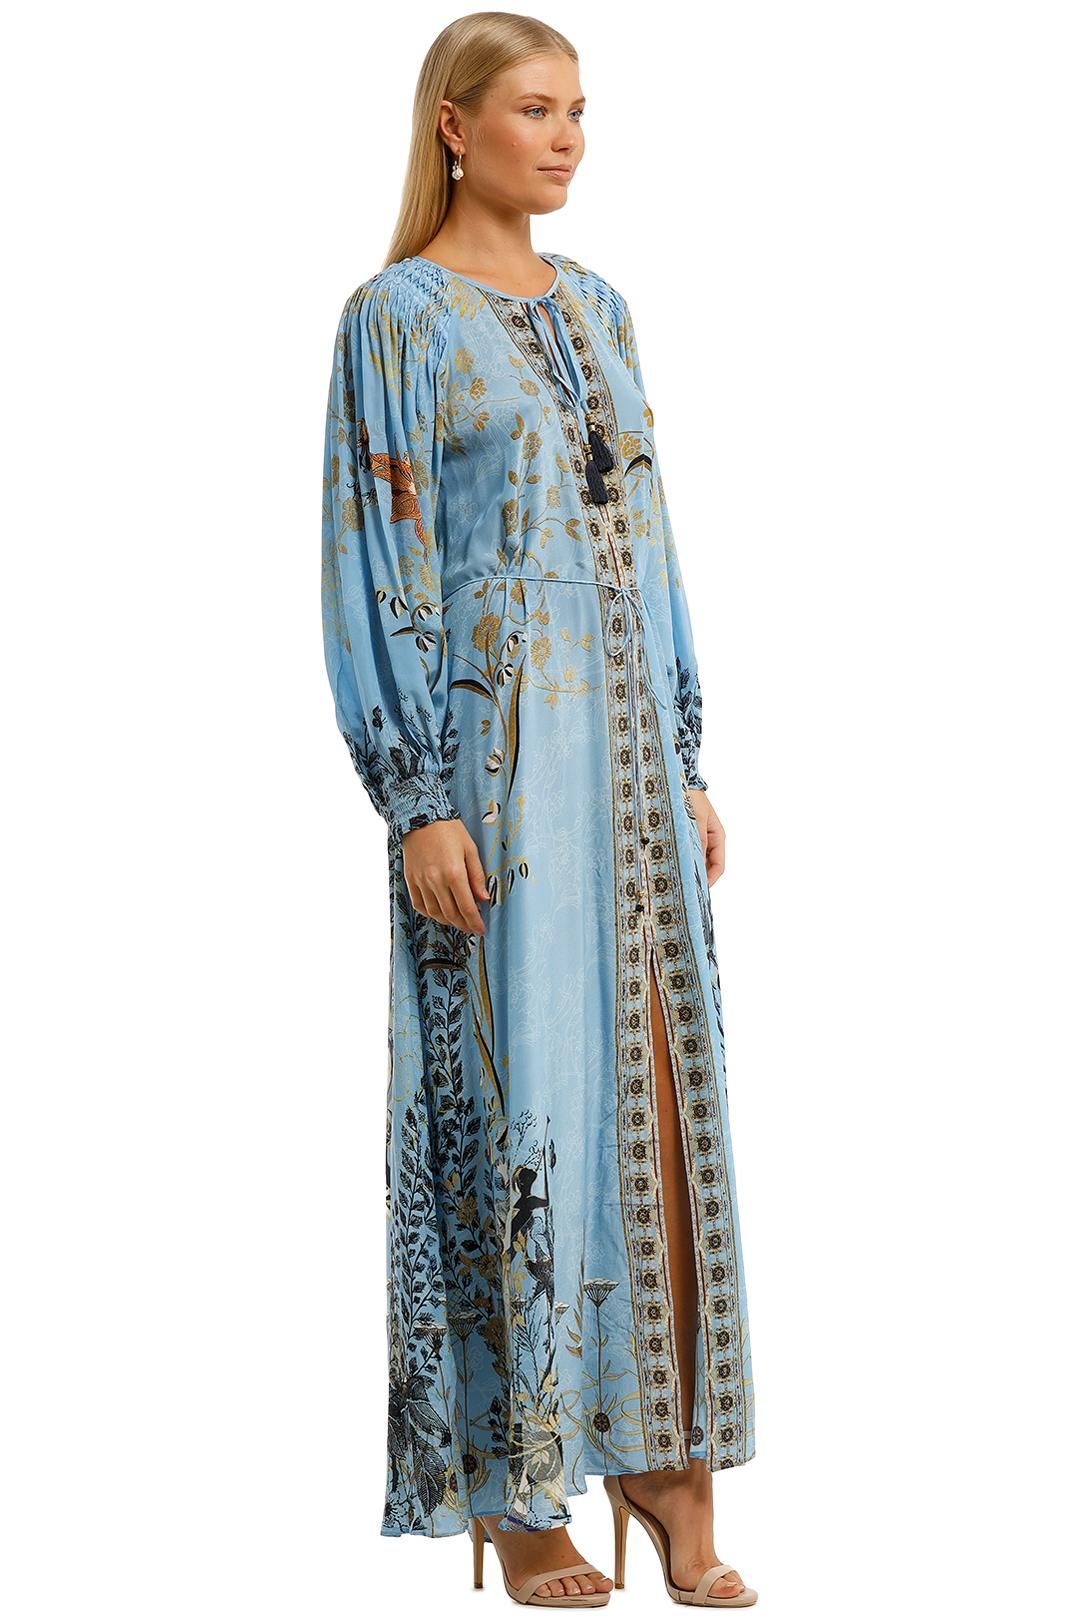 Camilla Dress With Smocked Sleeve Paster Blue Boho Print